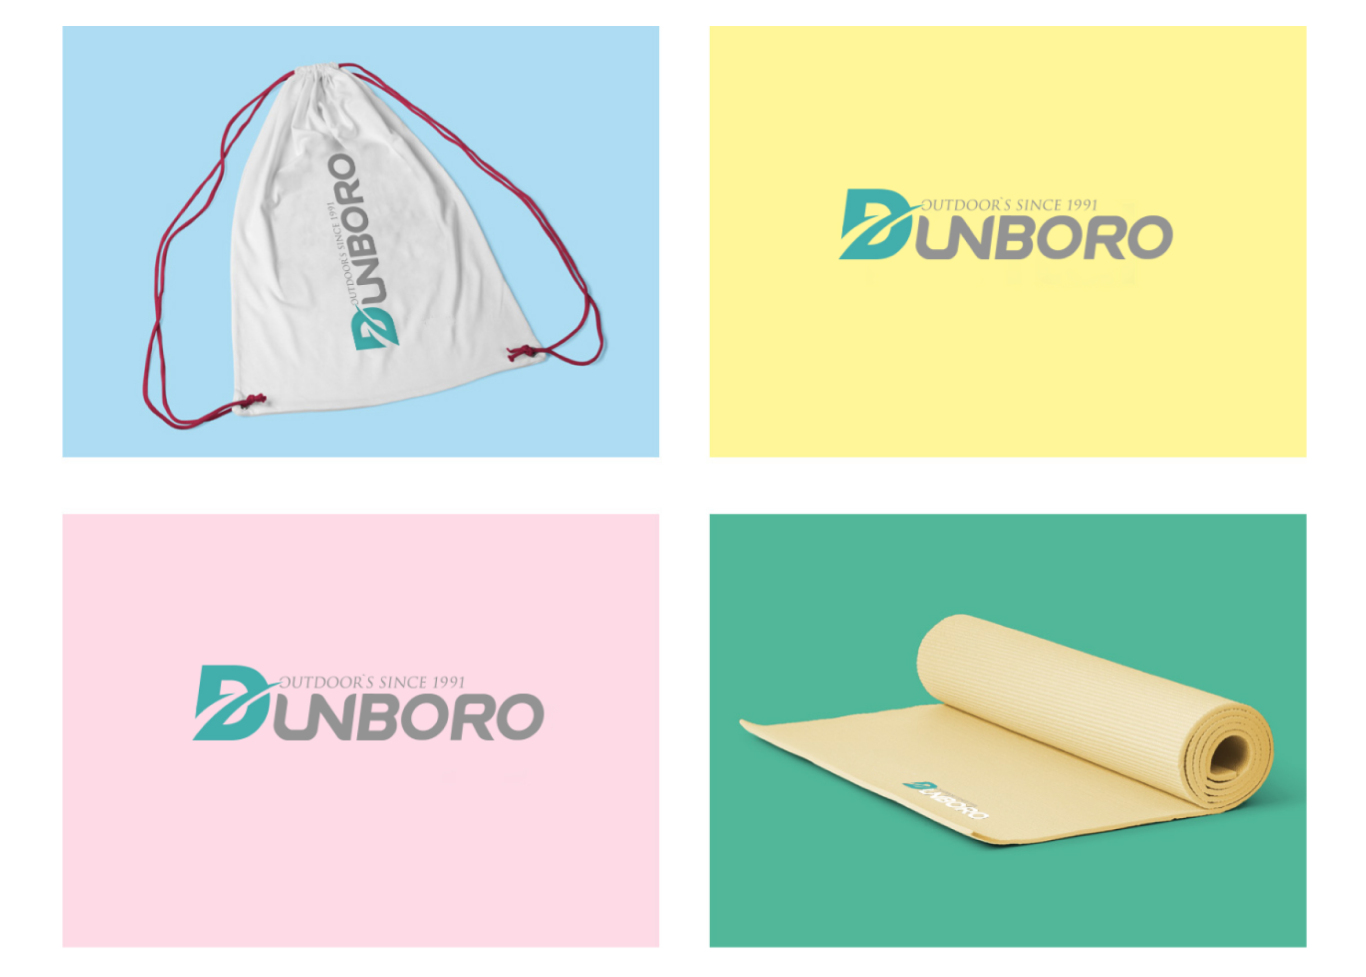 Dunboro运动户外品牌策划及方案设计logo+vis图35